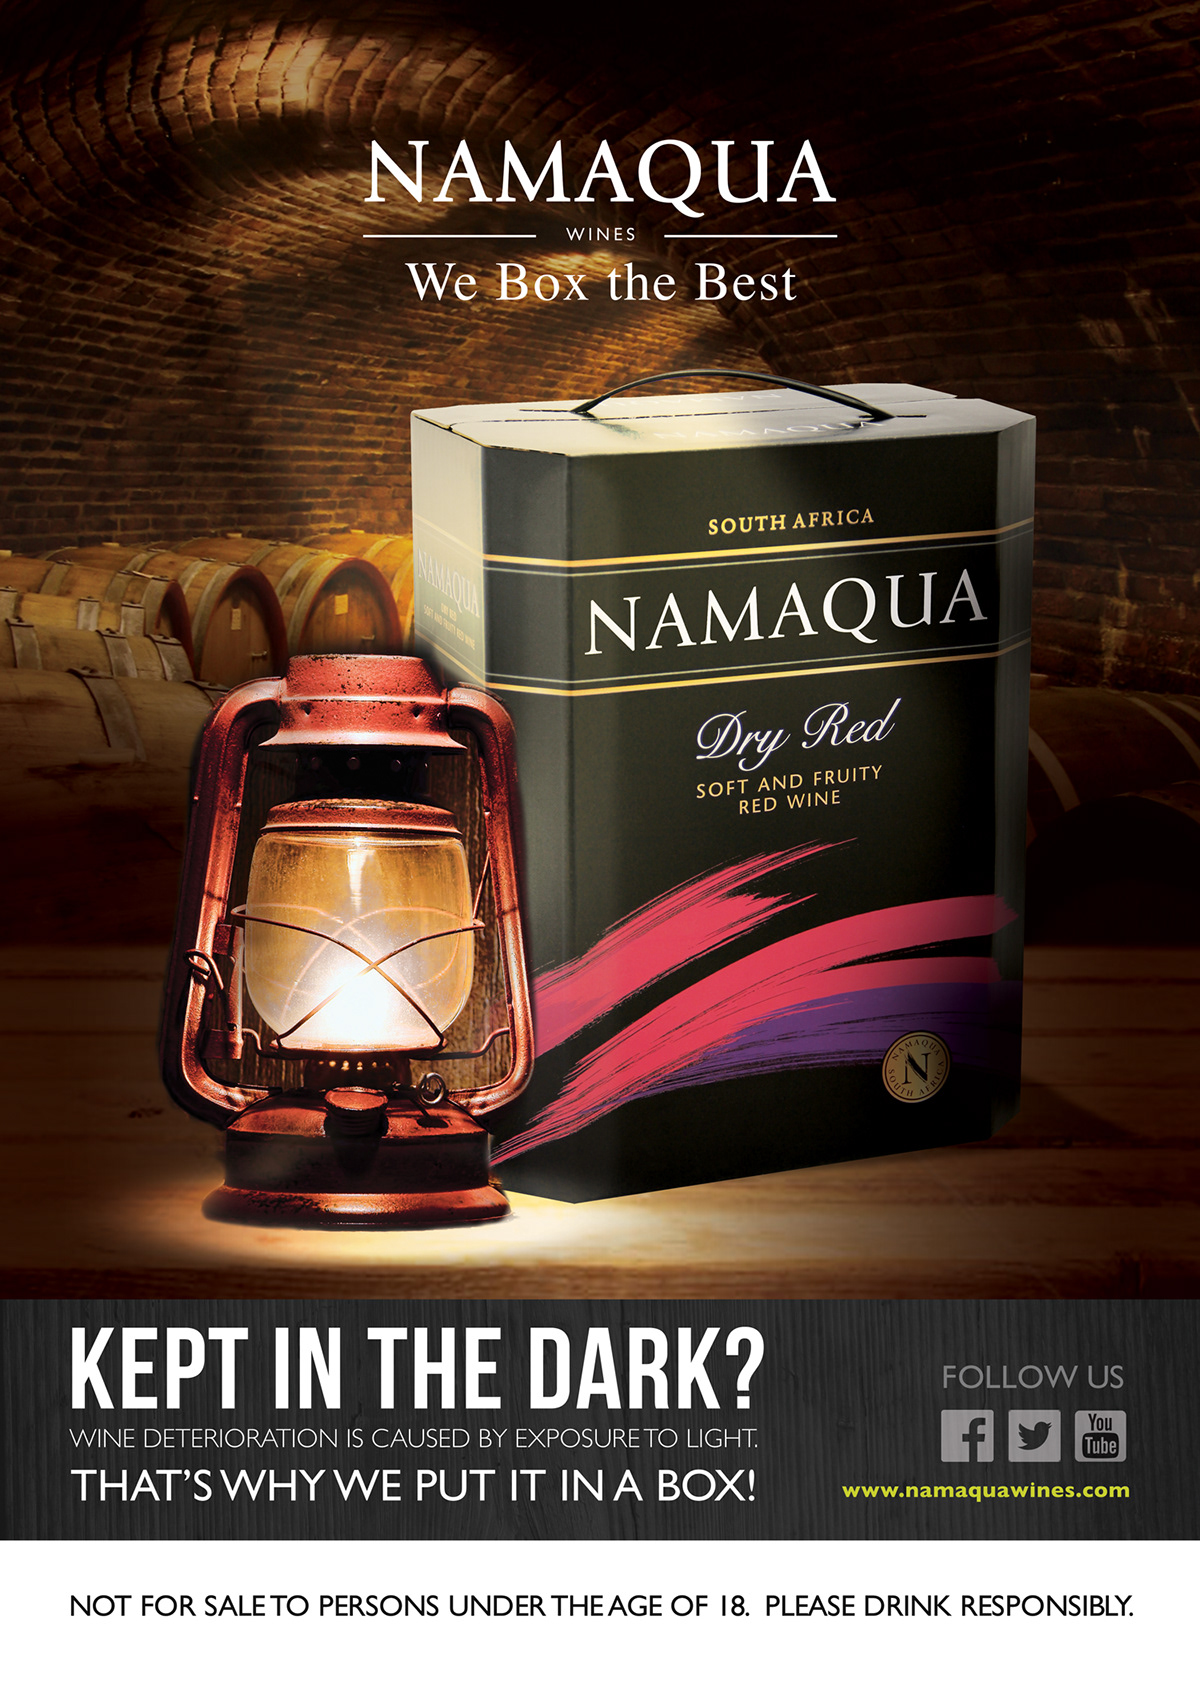 Namaqua boxed wine campaign adverts print